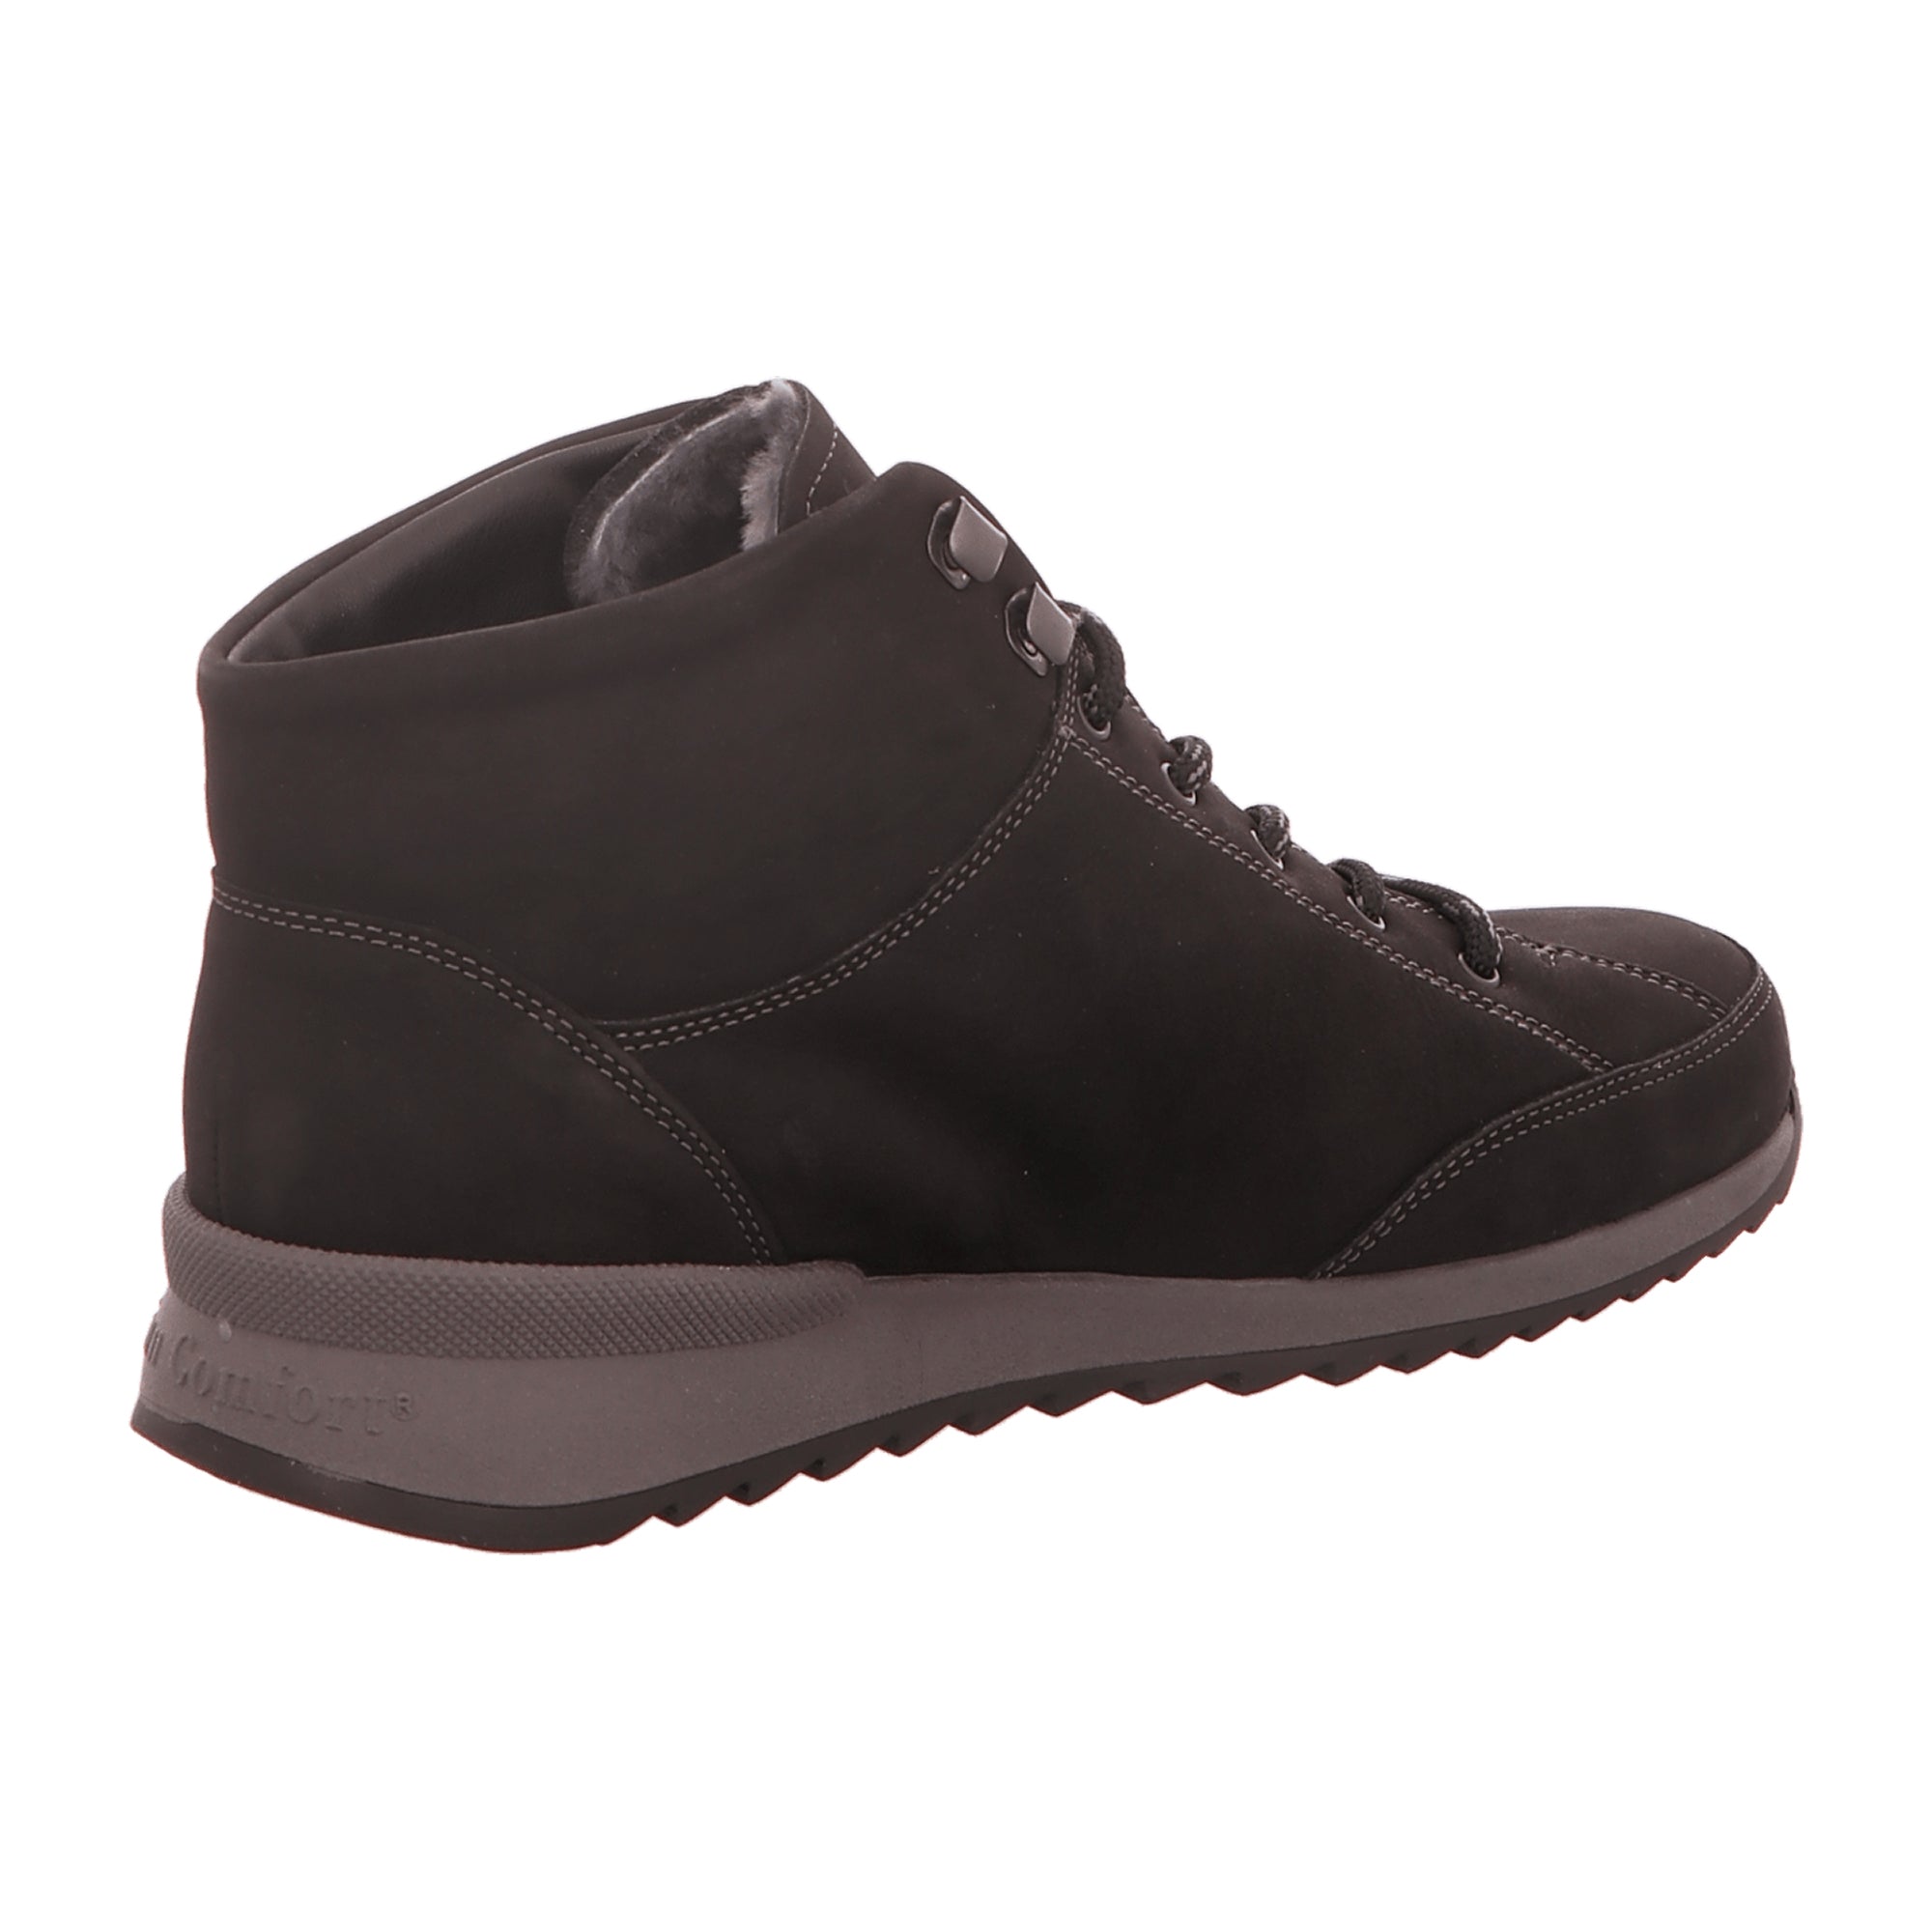 Finn Comfort Merano Women's Brown Comfort Shoes - Stylish & Durable